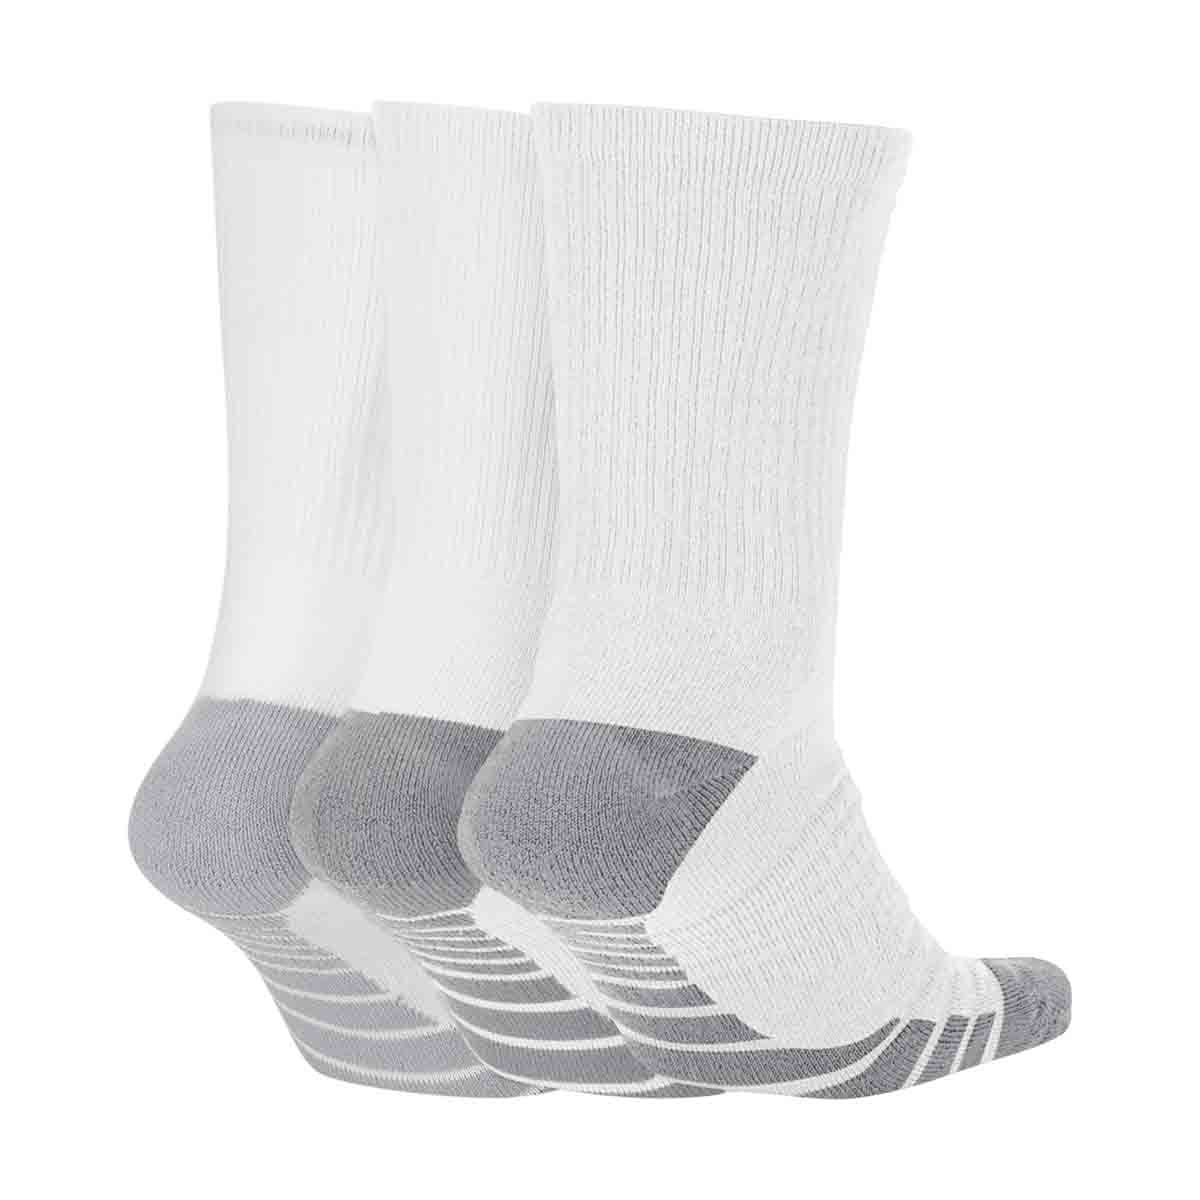 Nike NBA Elite Quick Socks - White & Black - Ankle/Mid/Full Length - M/L/XL  !